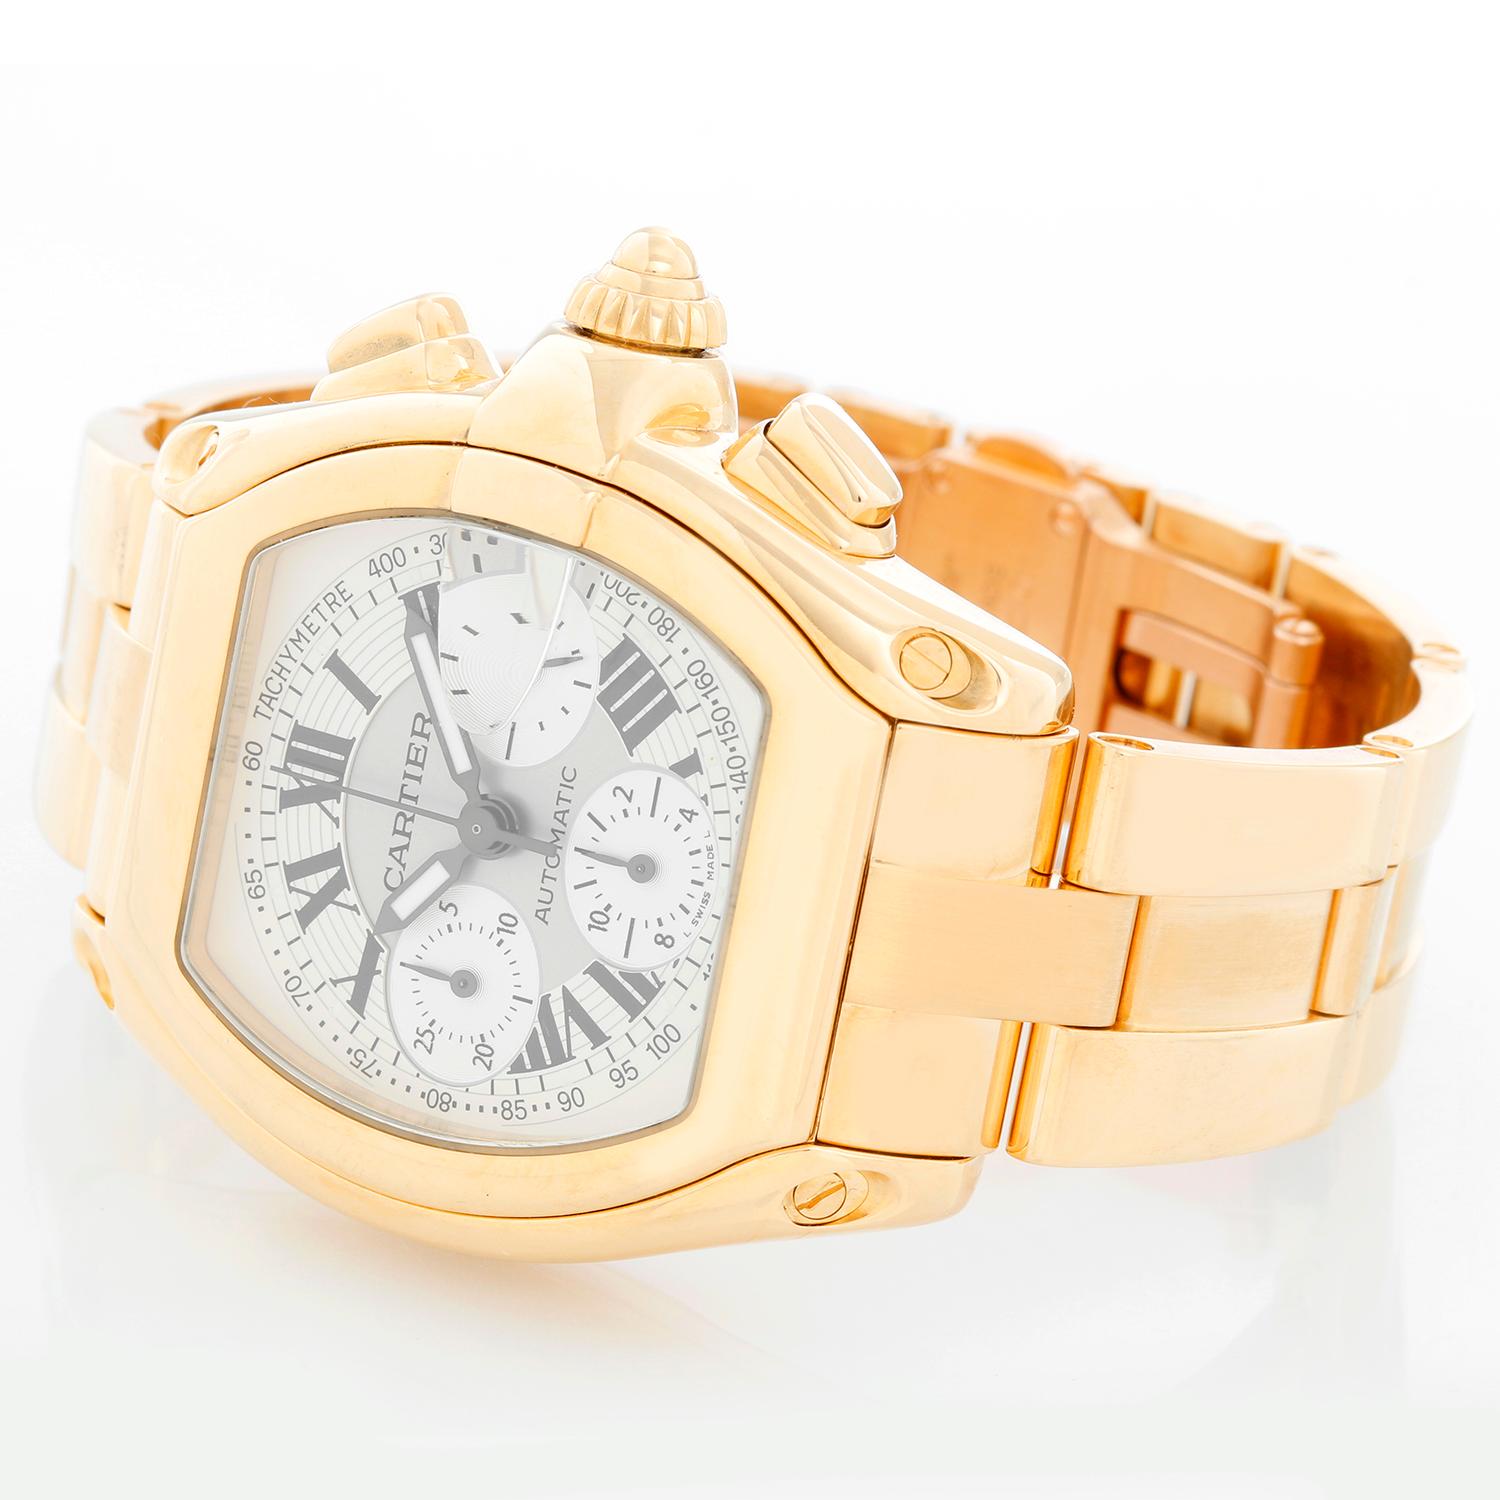 Cartier Roadster Chronograph 18 Karat Yellow Gold Men's Watch W62021Y2 1